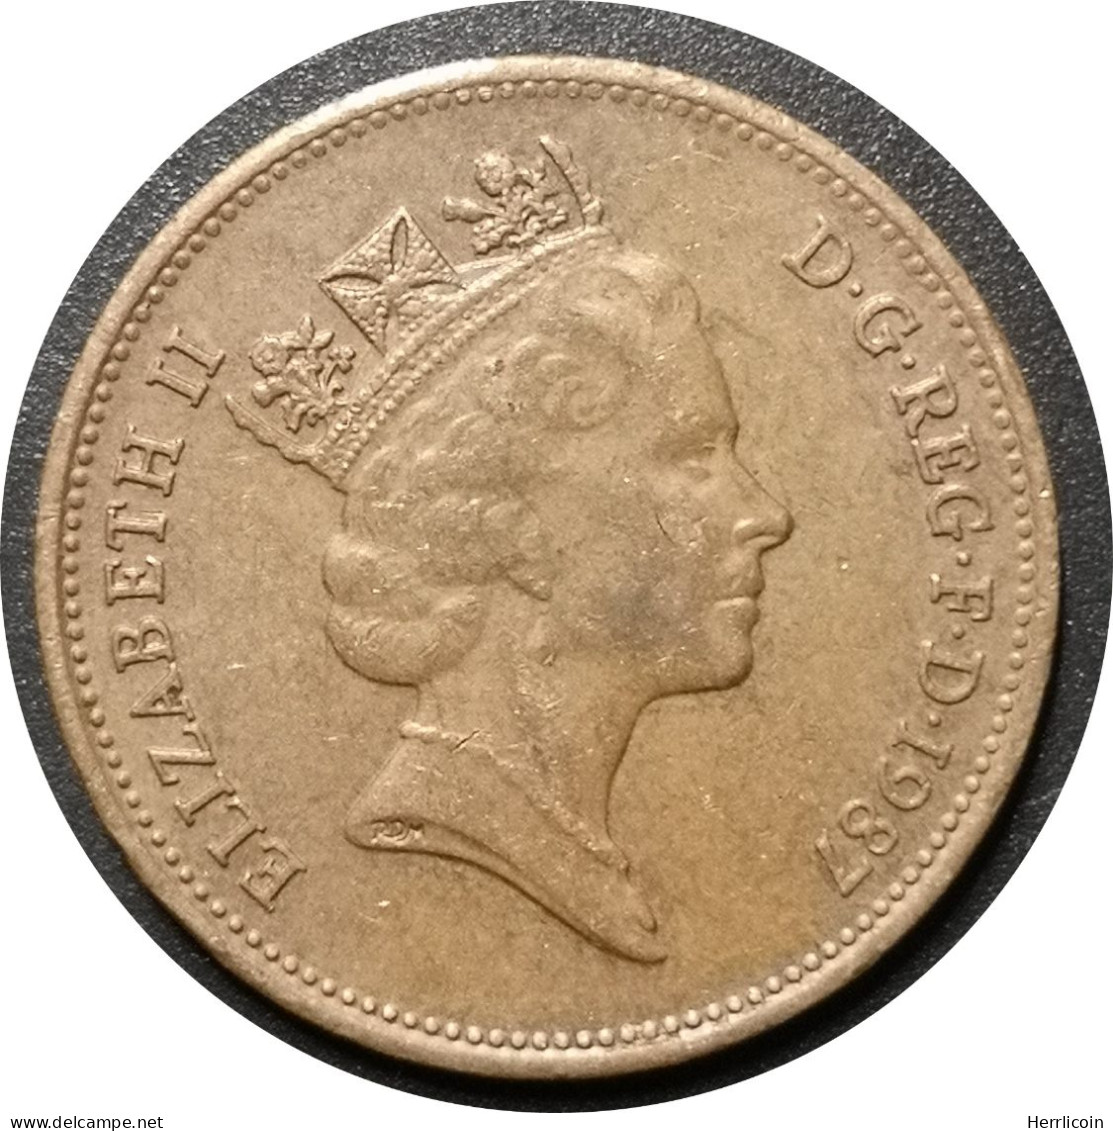 Monnaie Royaume Uni - 1987 - 2 Pence Elizabeth II 3e Effigie, Bronze - 2 Pence & 2 New Pence